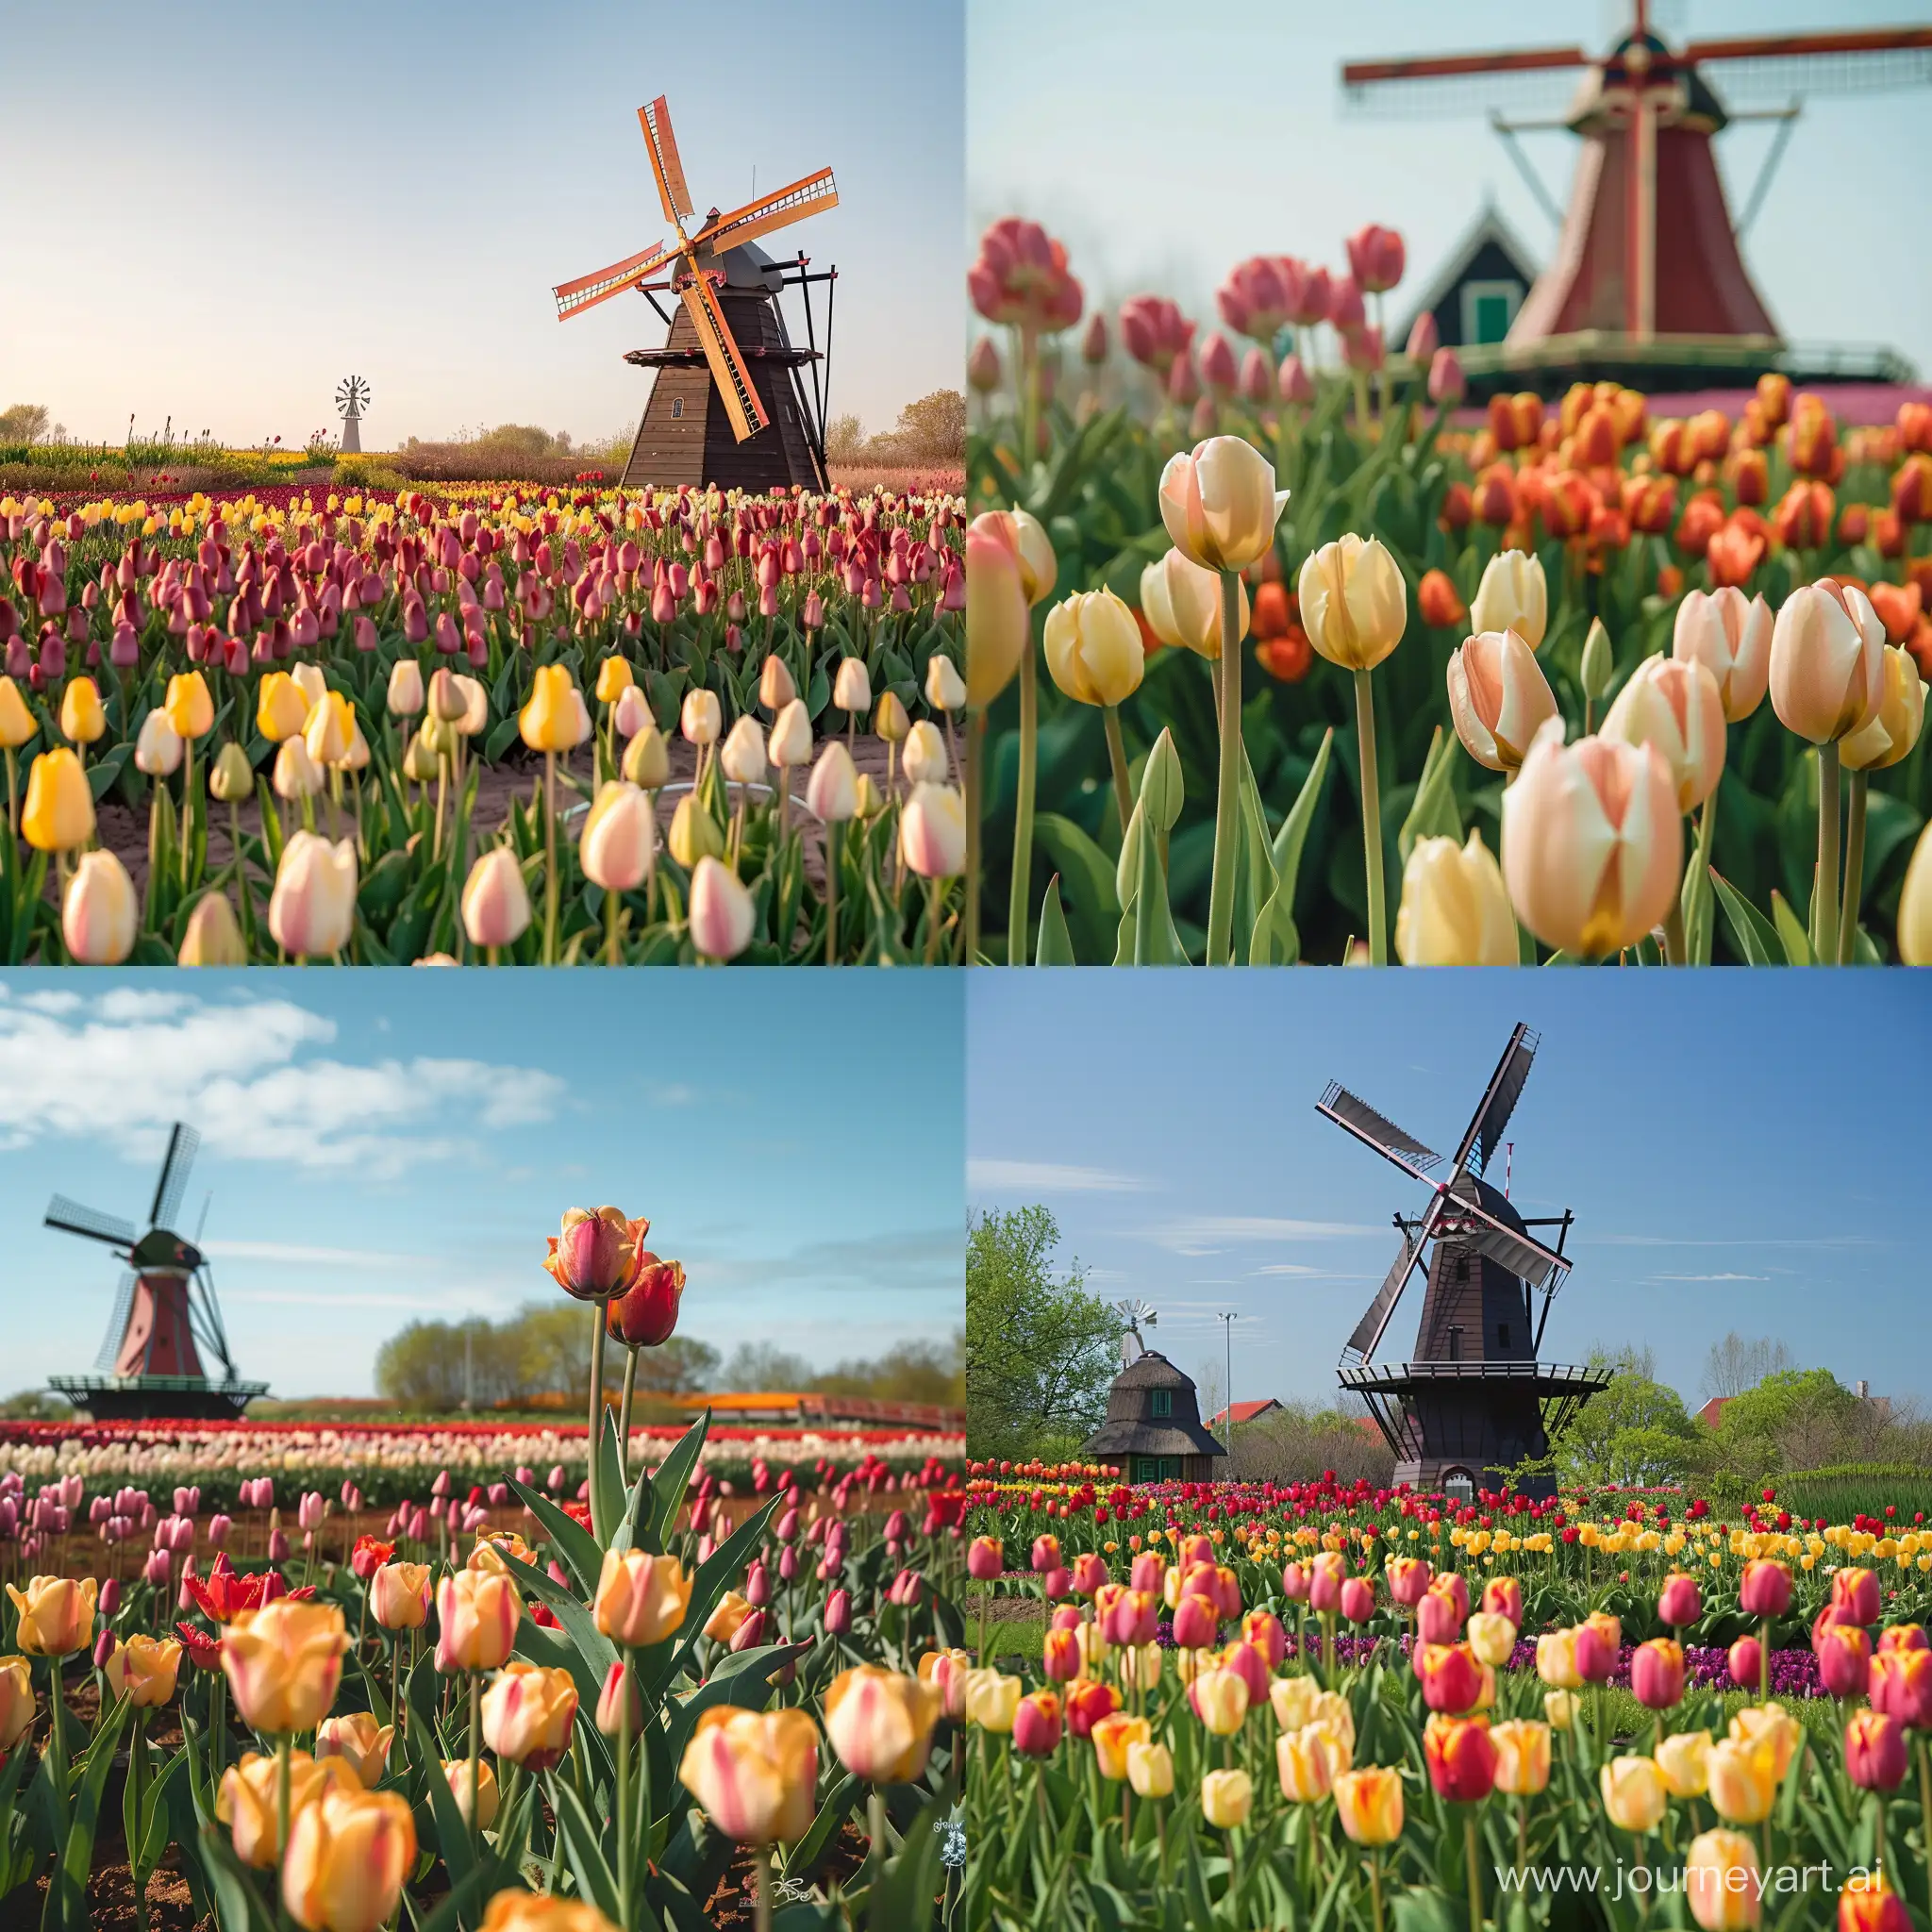 Vibrant-Tulip-Field-Surrounding-Picturesque-Windmill